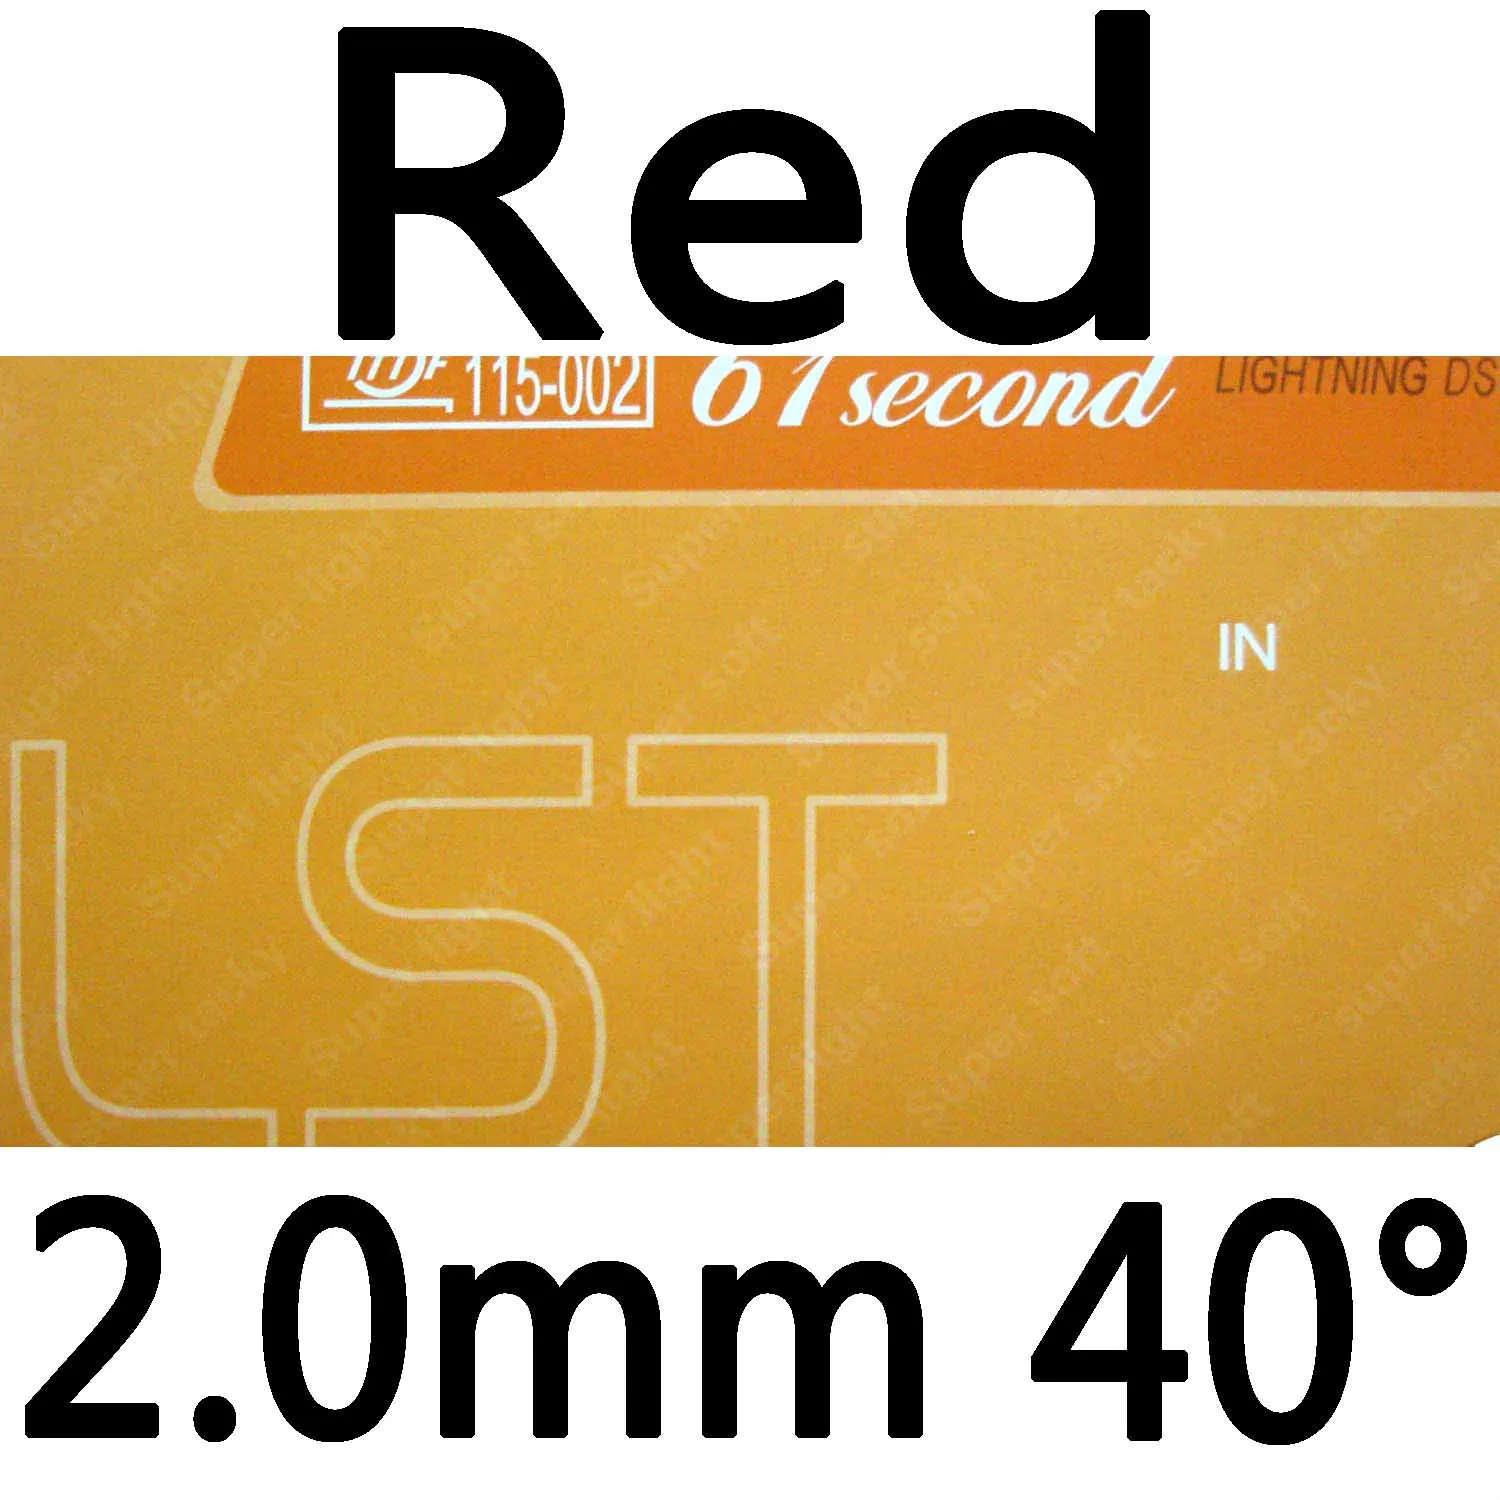 61second молния DS LST супер липкий накладки Резина с губкой на ракетки для настольного тенниса - Цвет: red 2.0mm H40